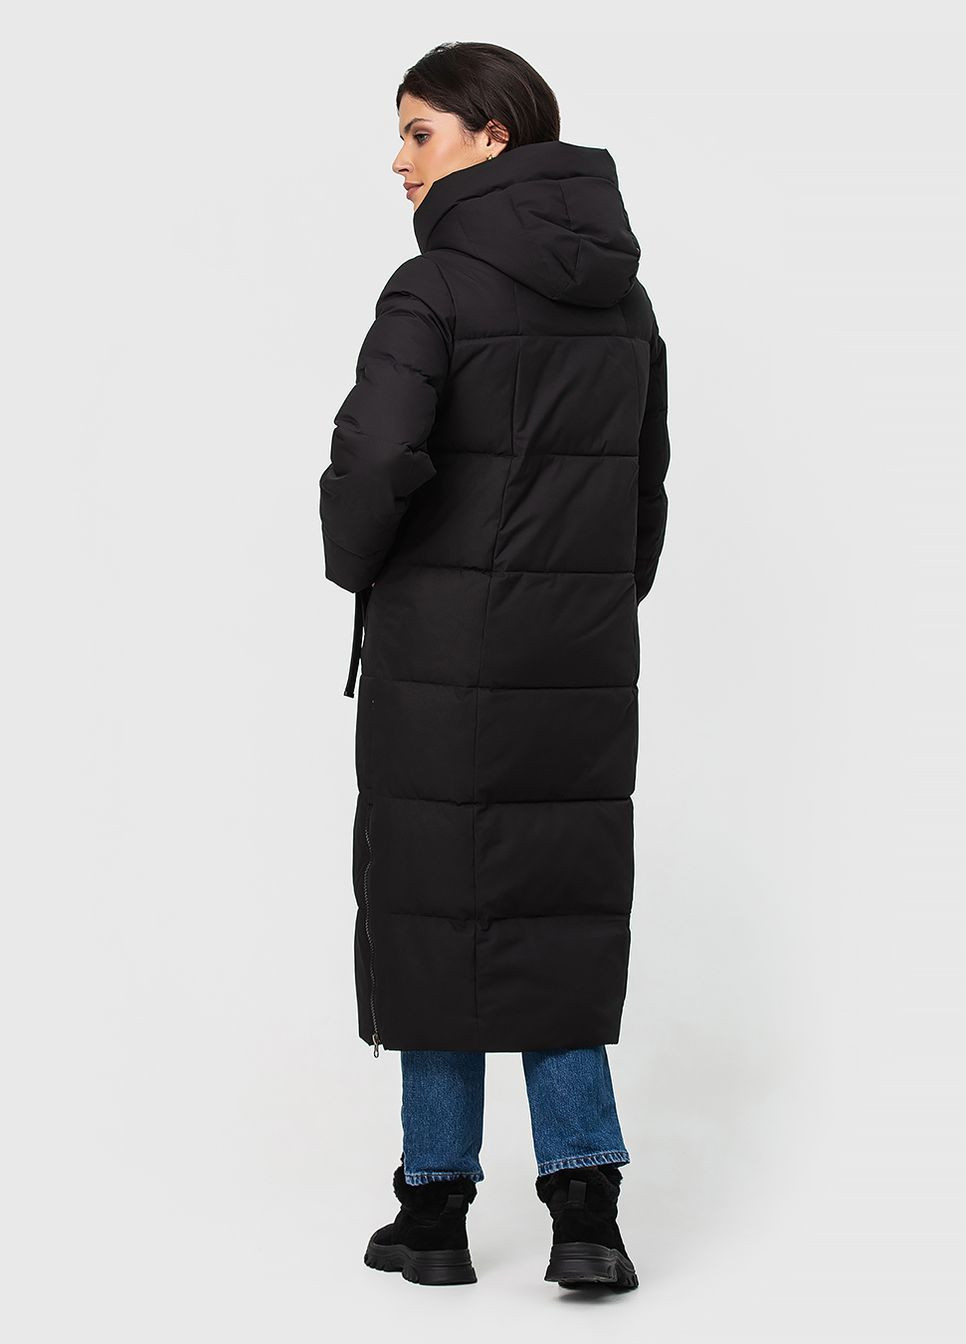 Черная зимняя базова куртка-пальто з капюшоном модель Icebear 3953